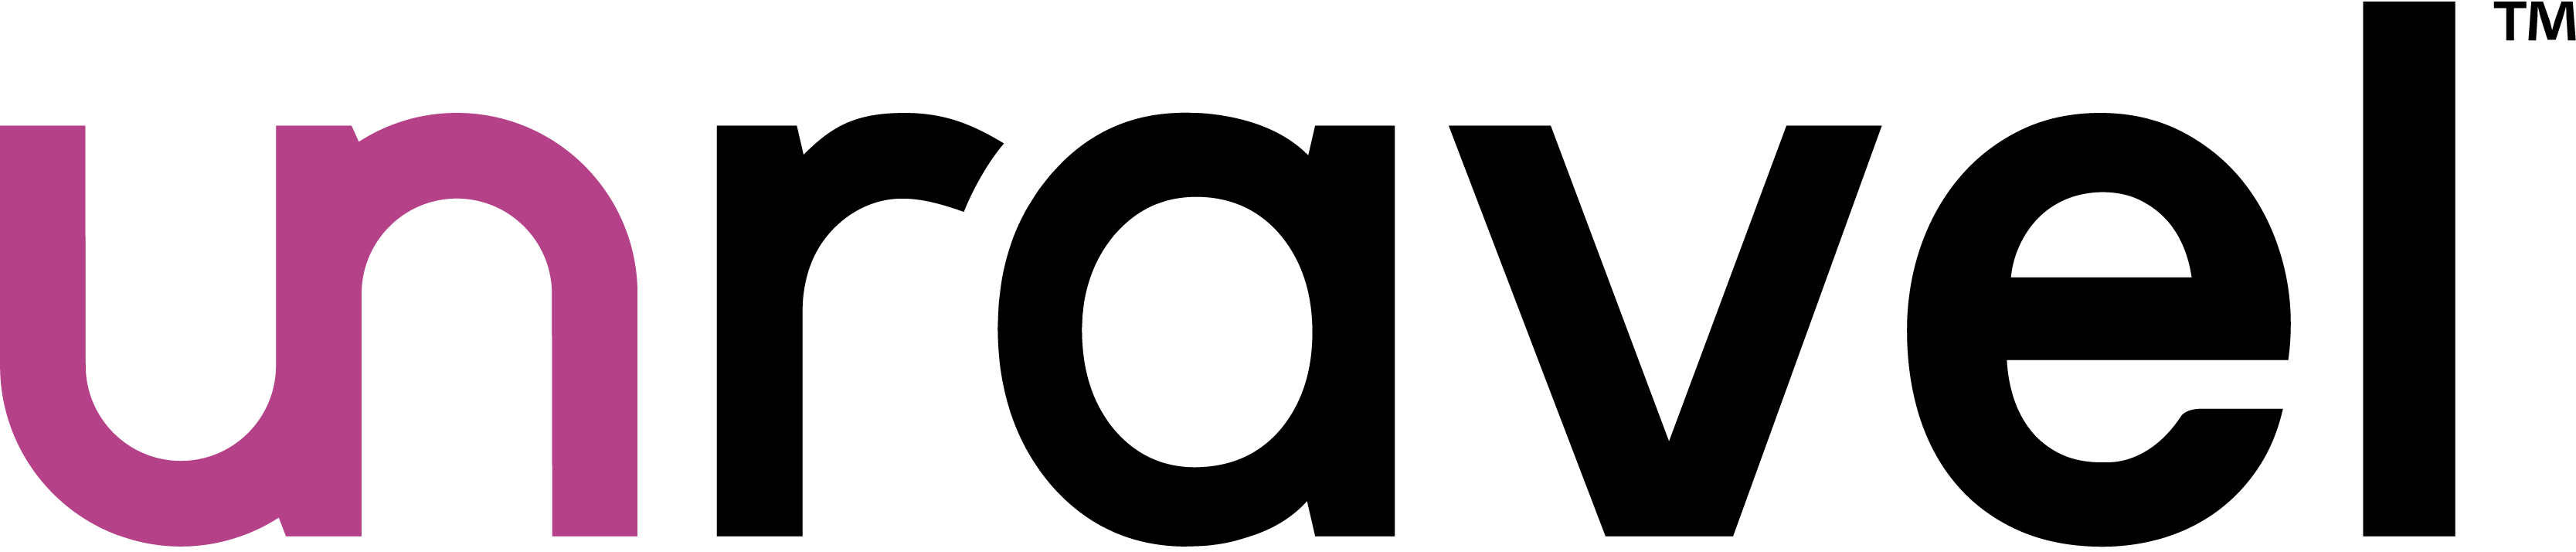 Unravel Logo Magenta Black